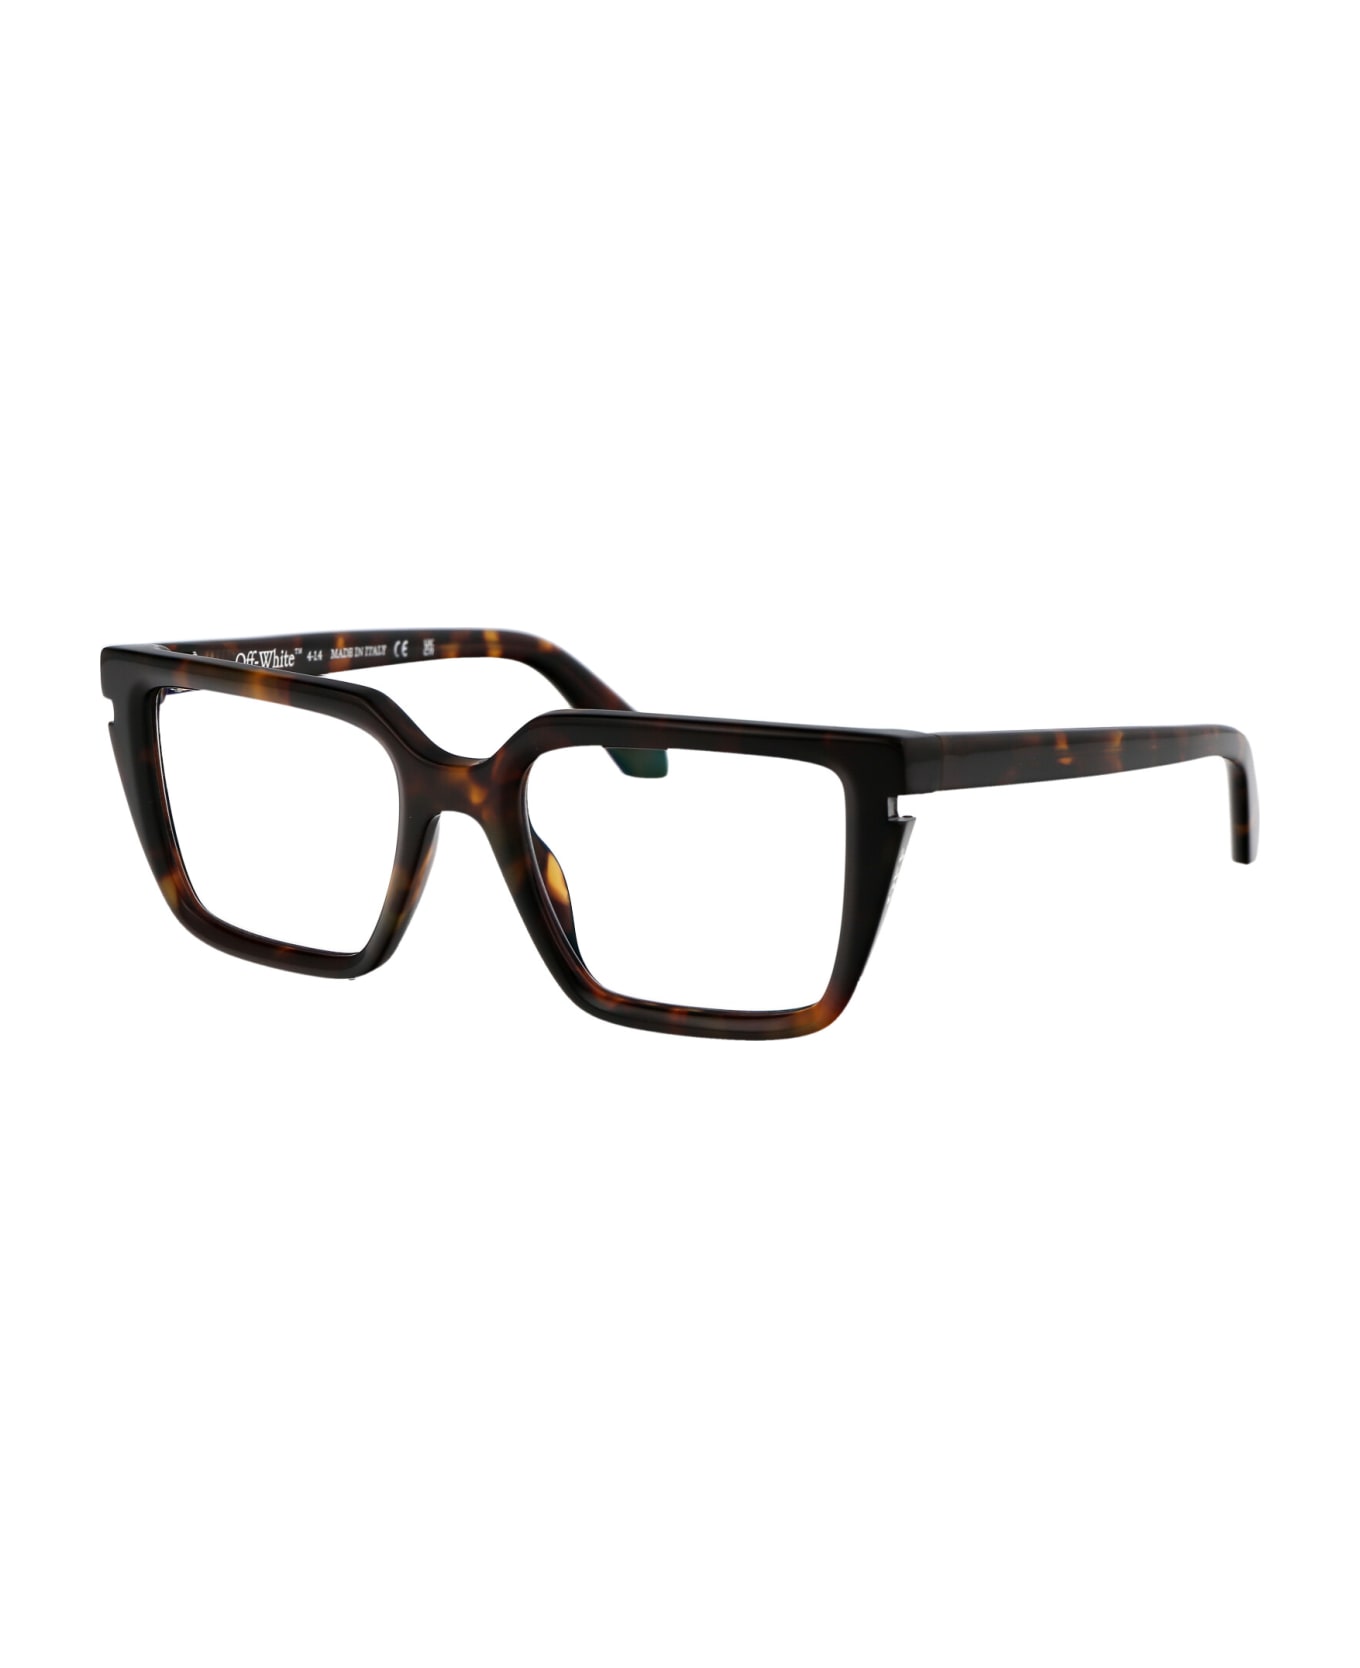 Off-White Optical Style 52 Glasses - 6000 HAVANA アイウェア